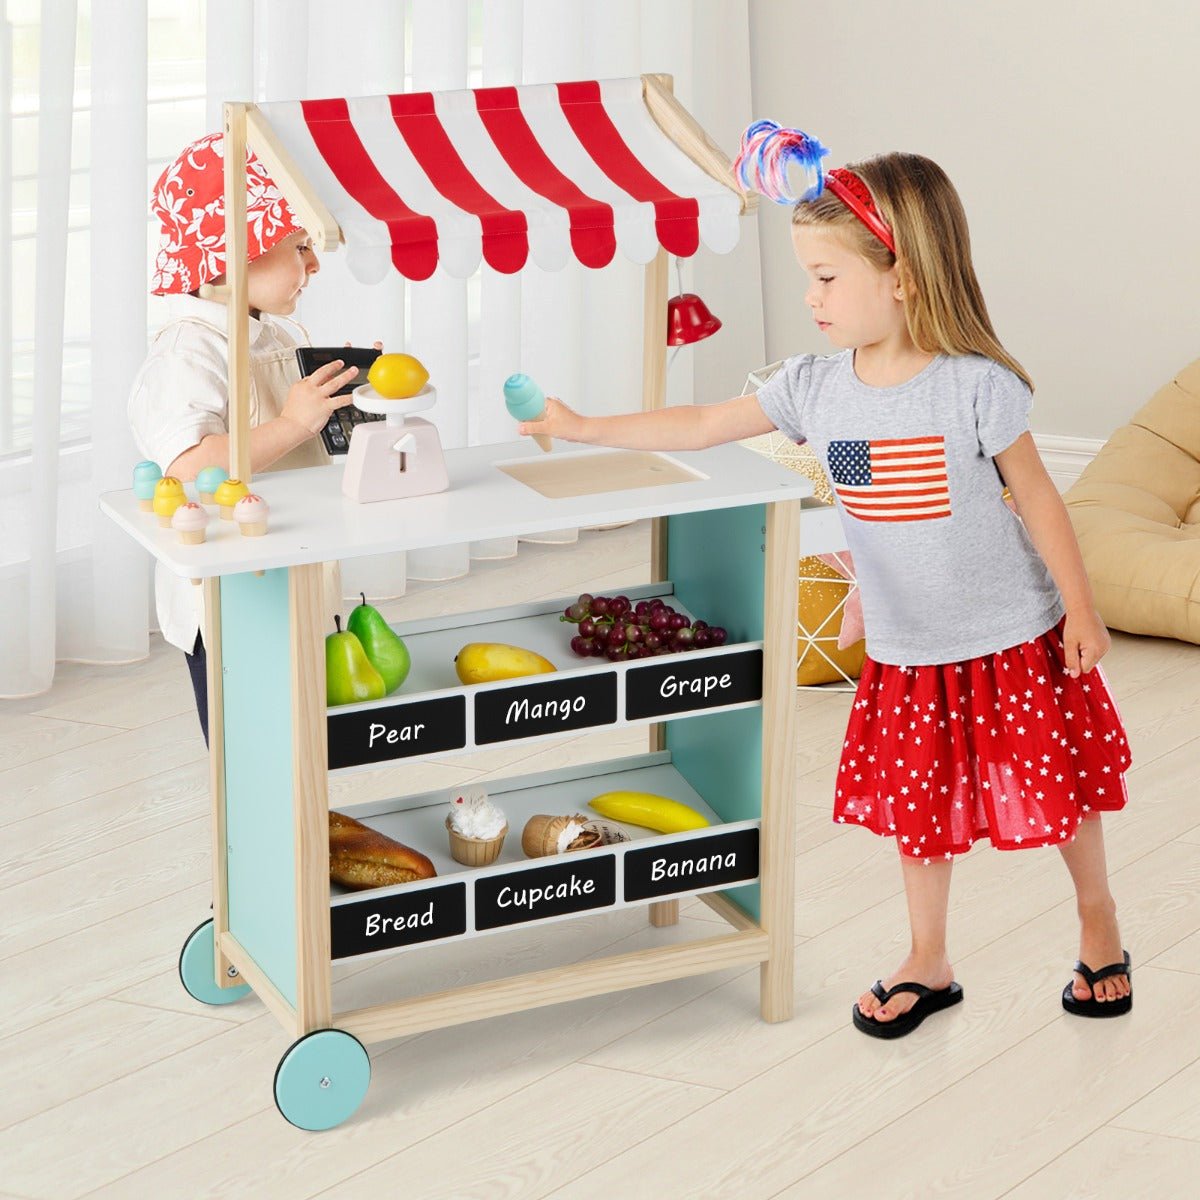 Imaginary Ice Cream Shop: Kids Wooden Ice Cream Cart with Chalkboard & Storage